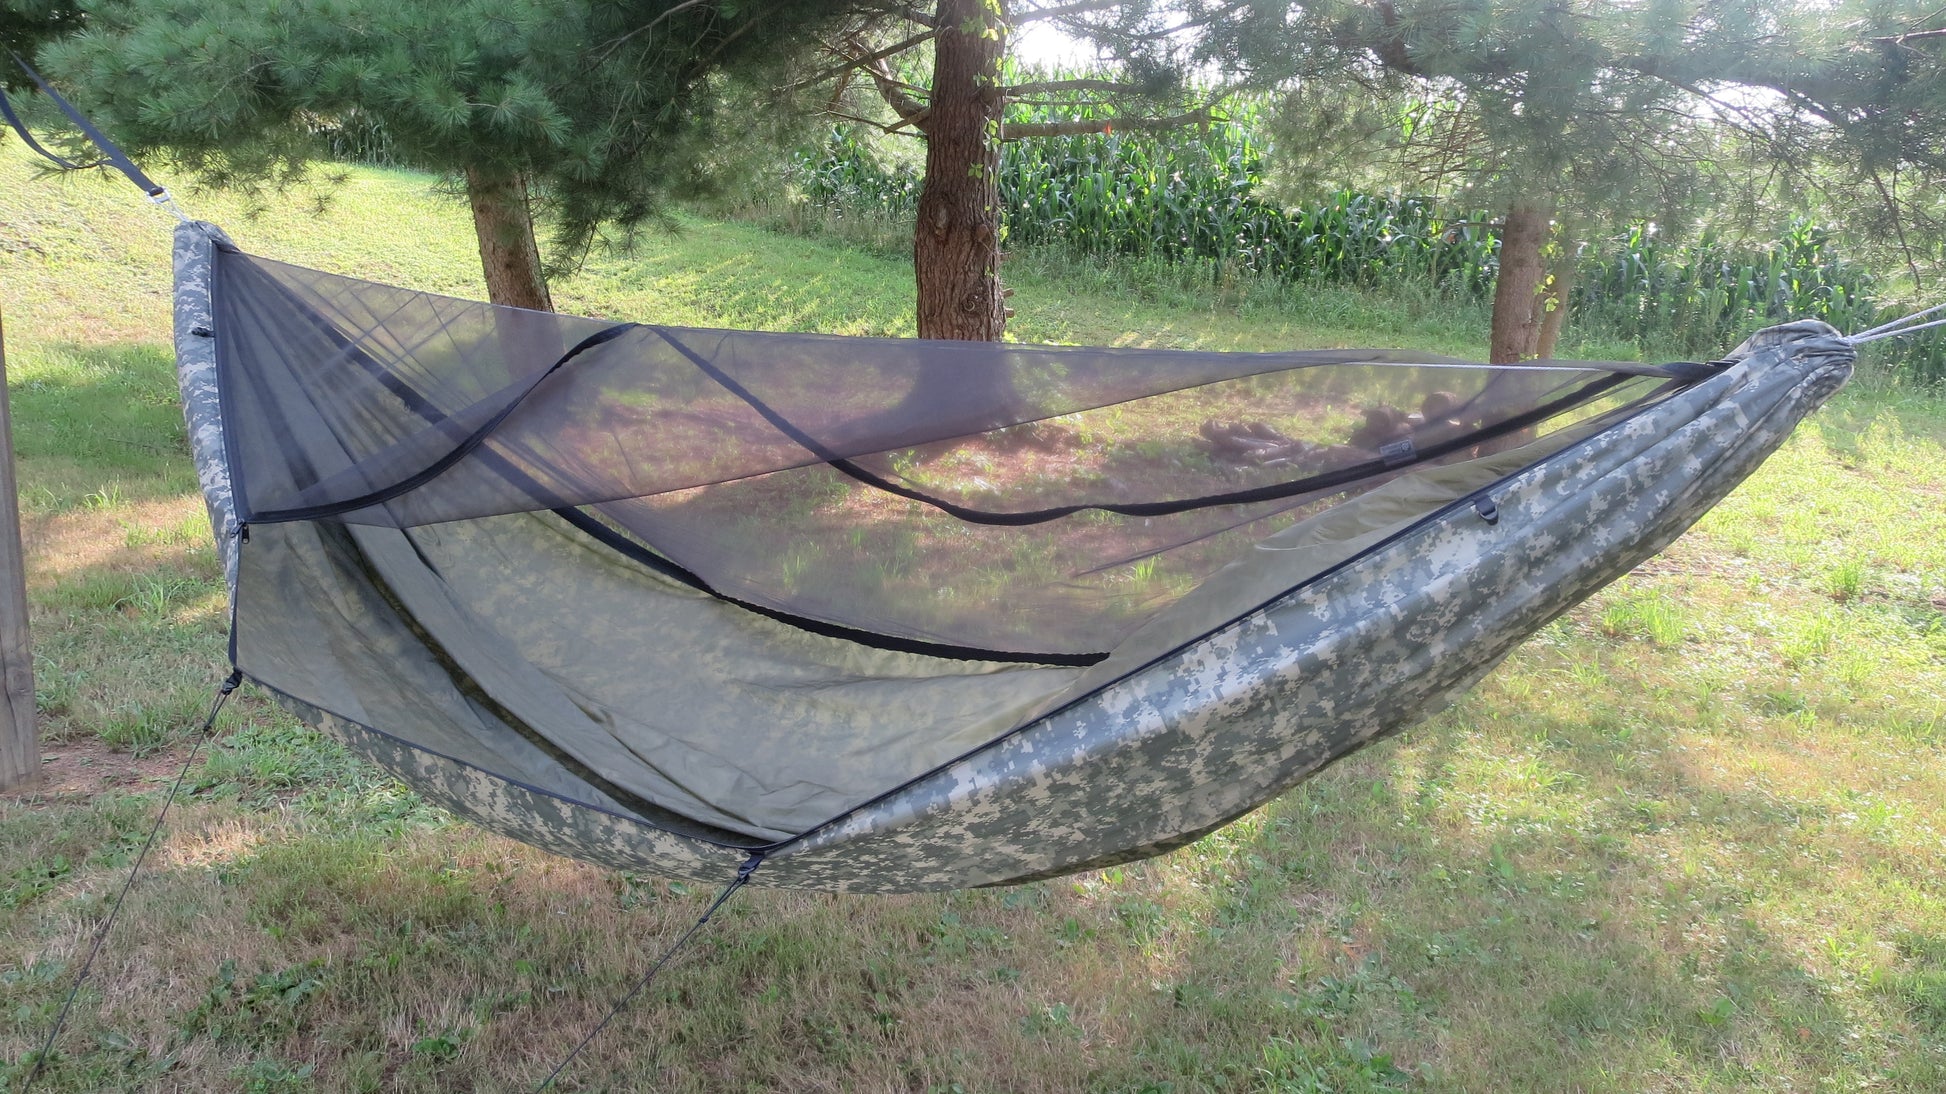 open net hammock ACU camo and olive drab ultralight camping hammock custom made dream hammock with bugnet or mosquito net best